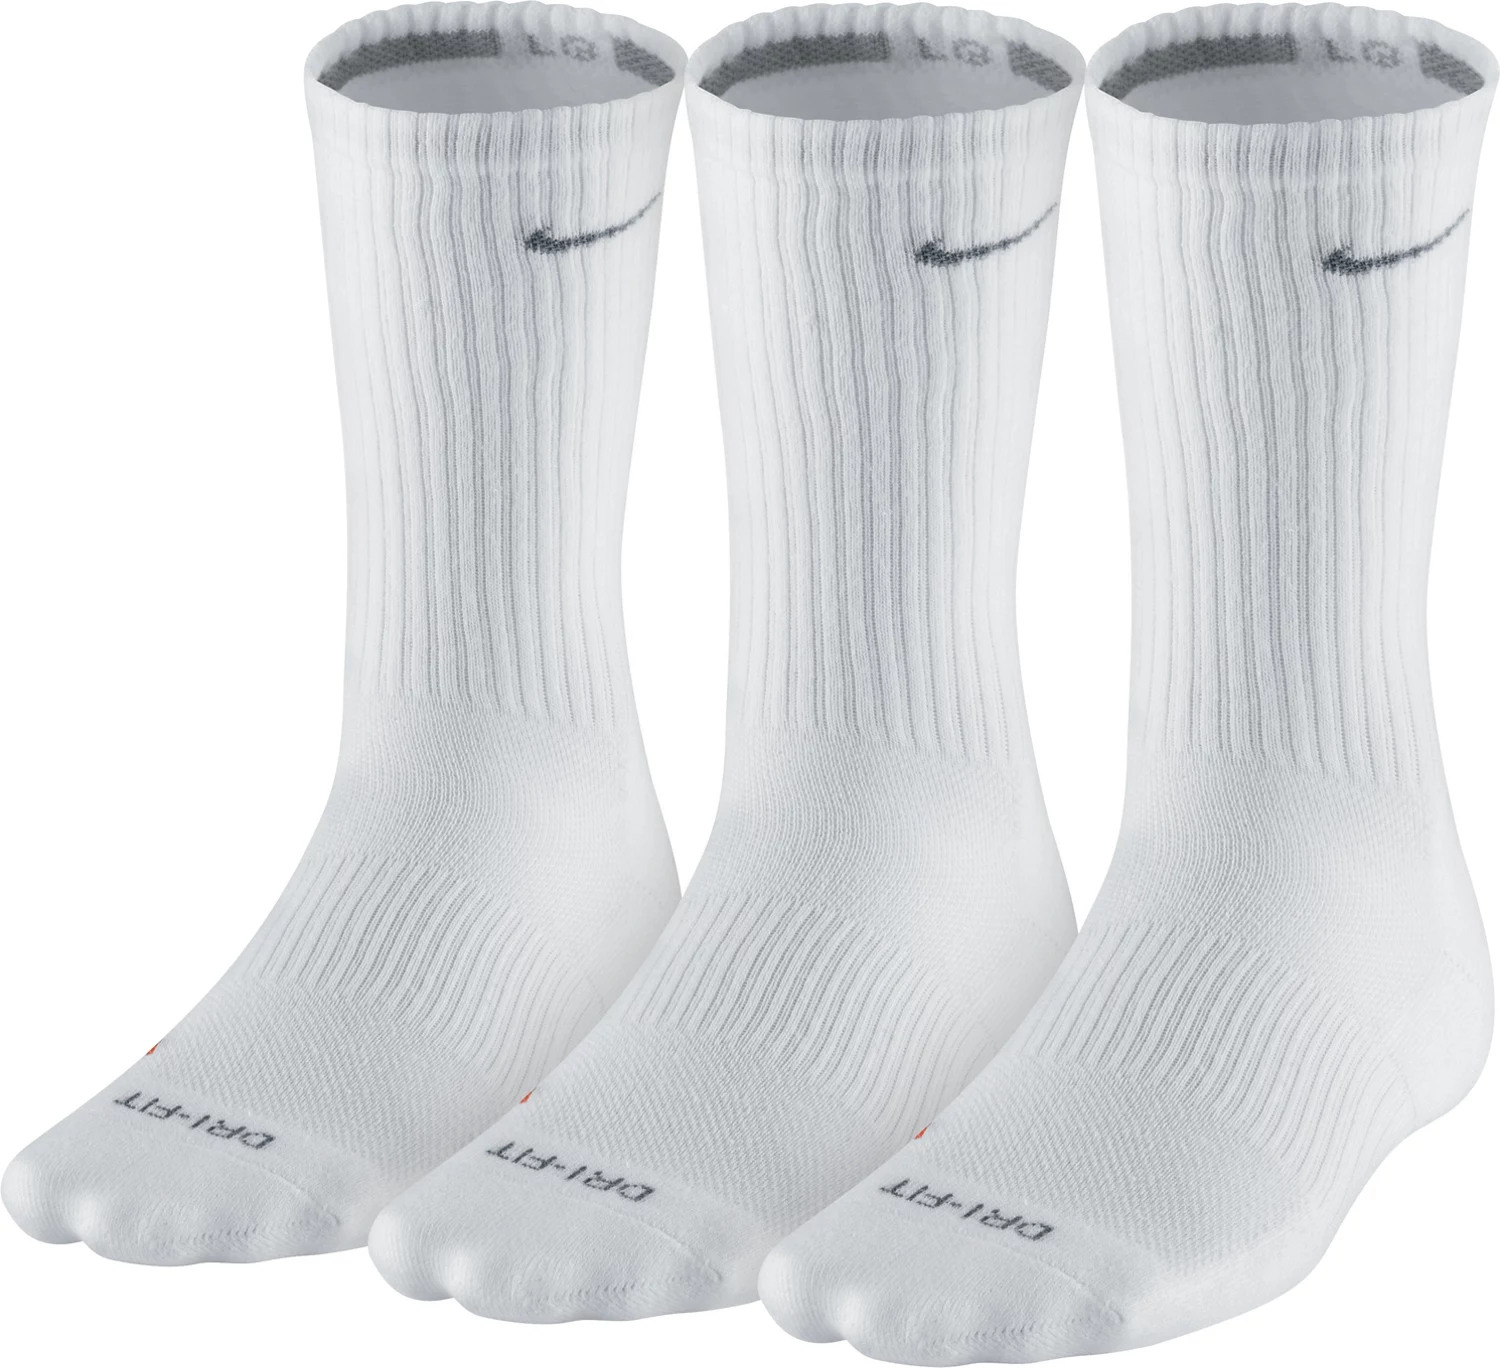 white nike socks with grey swoosh